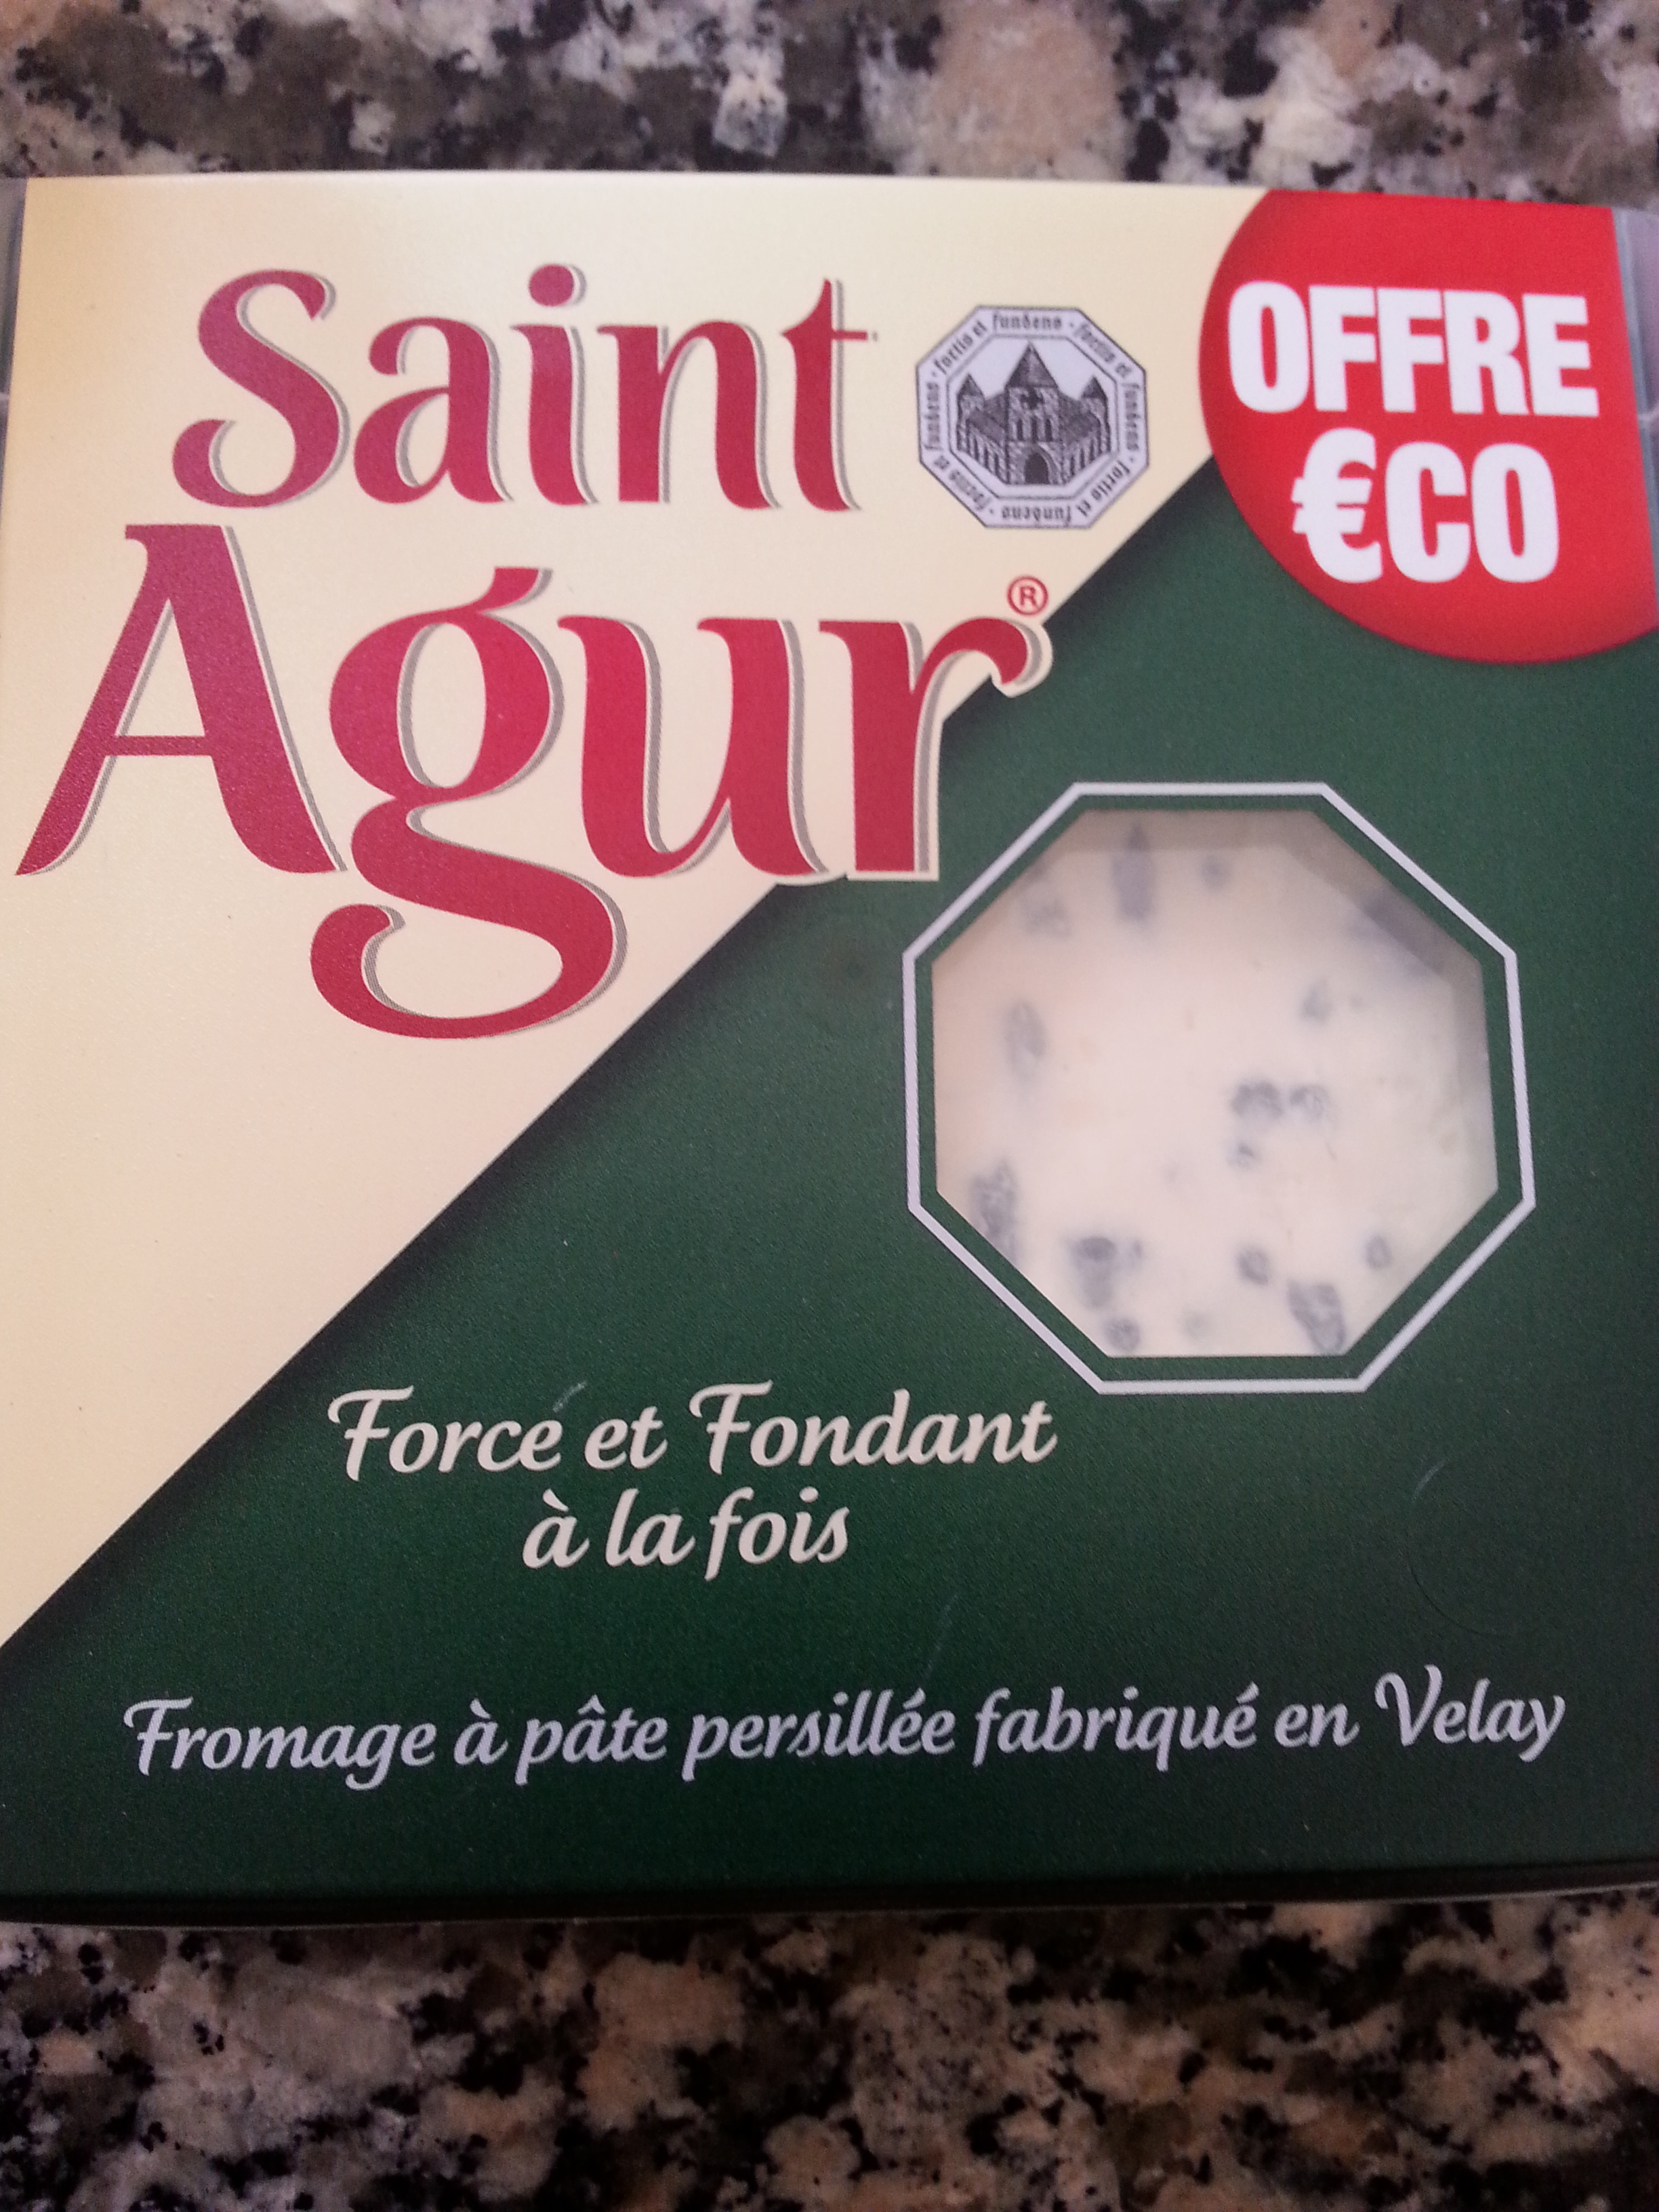 Saint Agur ® (33% MG) - Offre €co - Product - fr